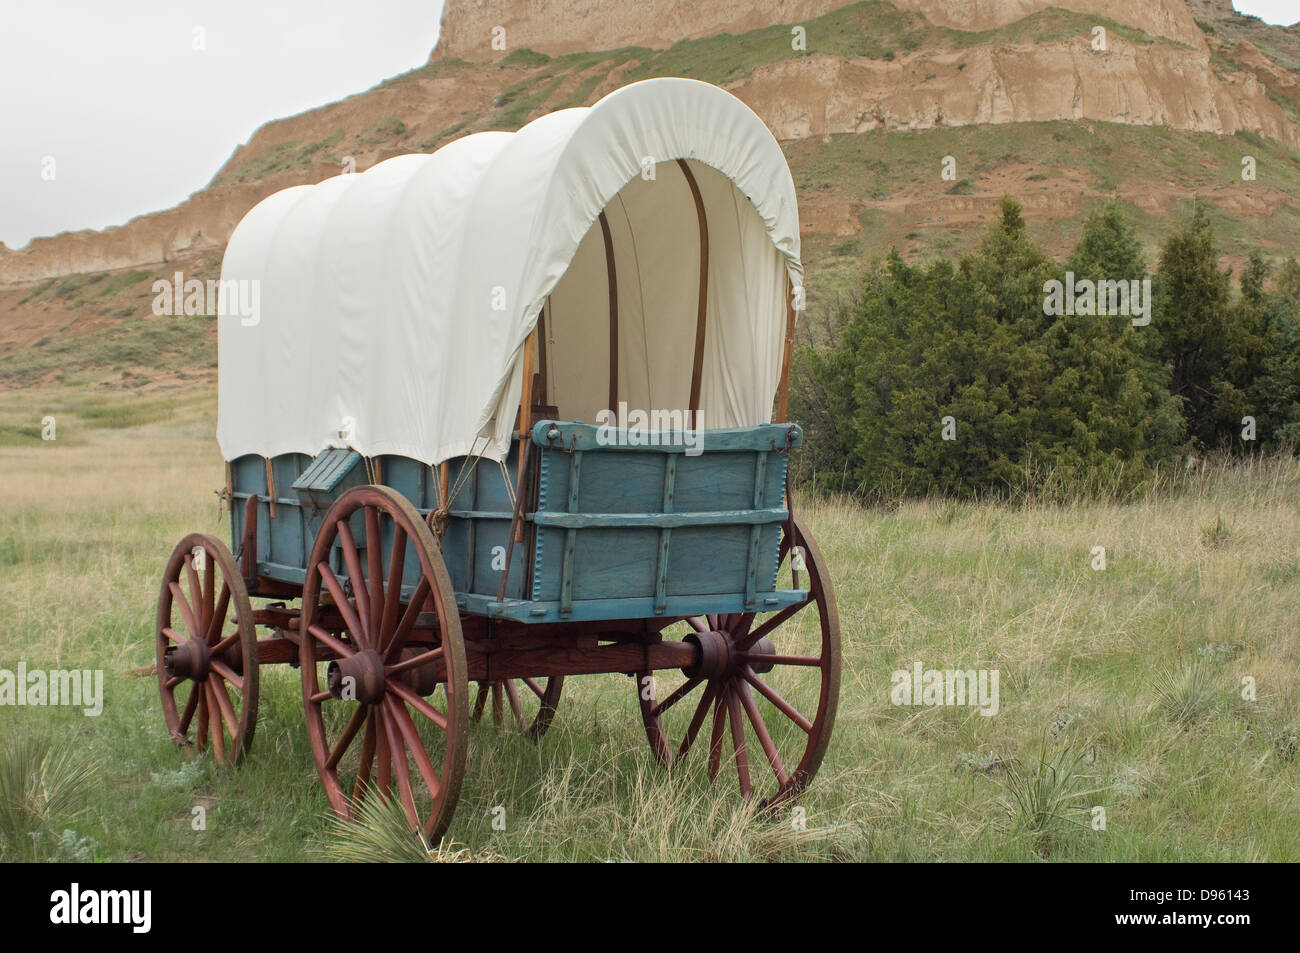 Covered wagon replica on the Oregon Trail, Scotts Bluff National Monument, Nebraska. Digital photograph Stock Photo